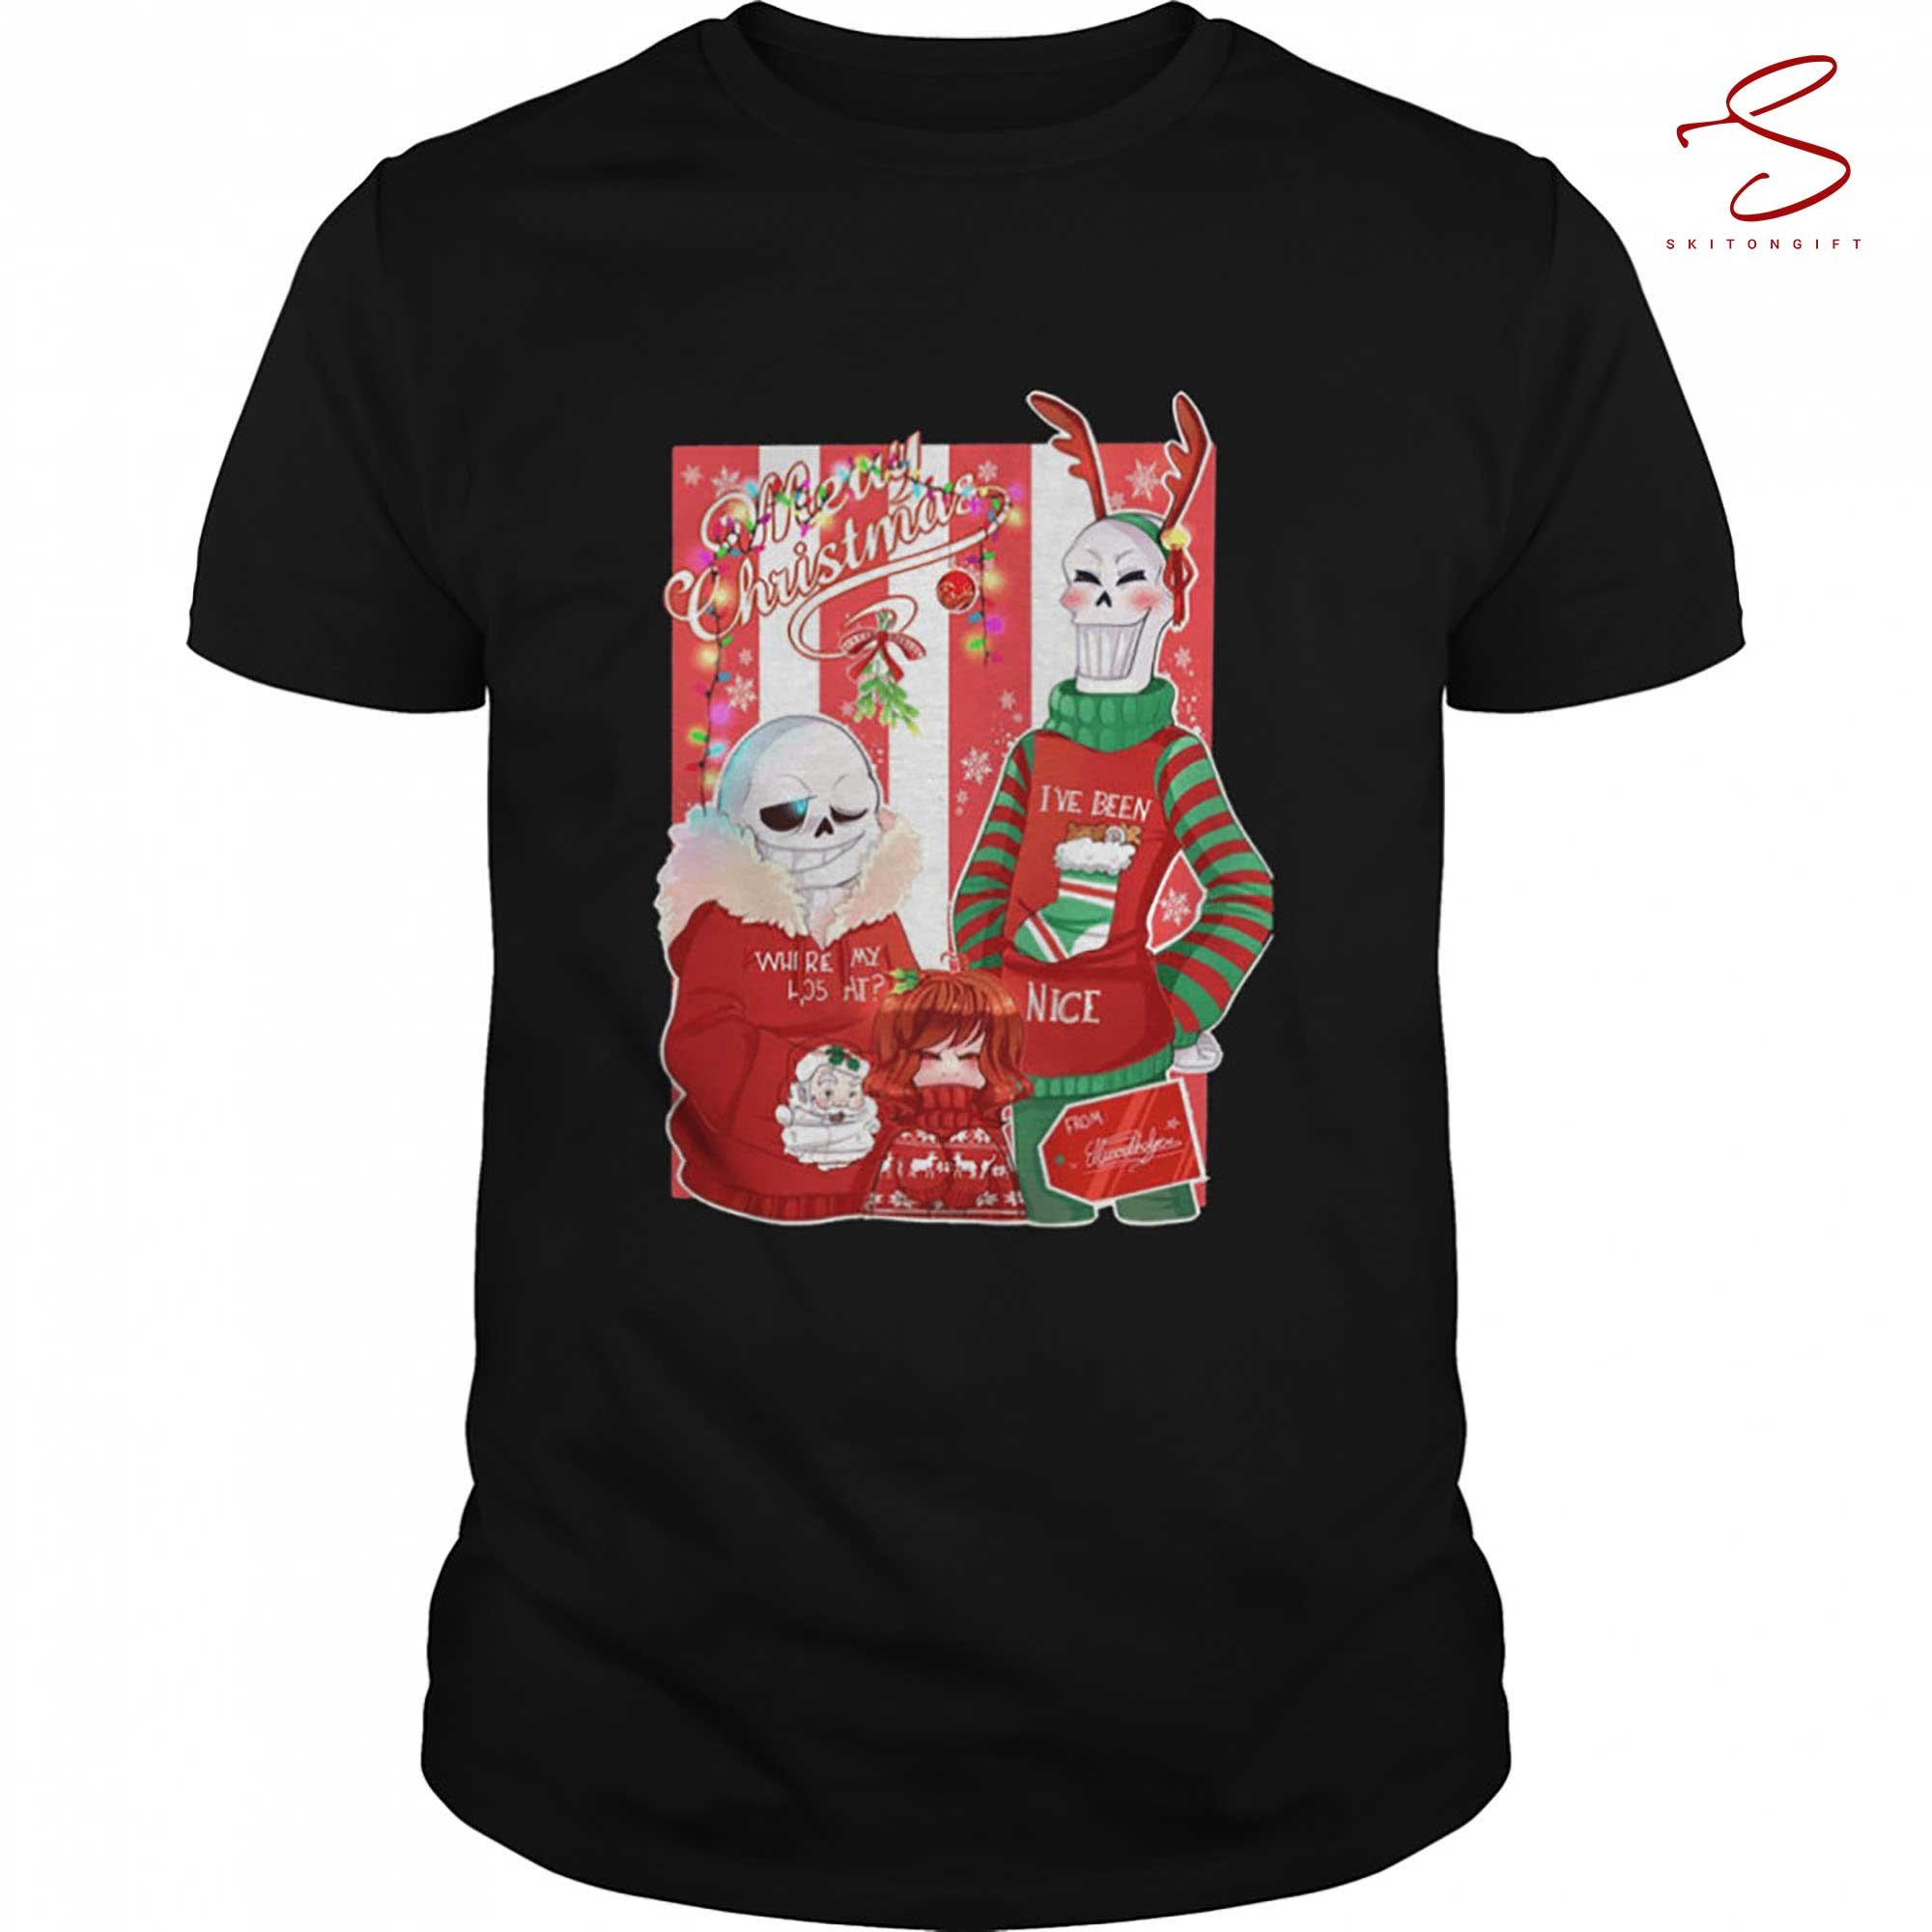 Skitongift A Funny Christmas Graphic T Shirt